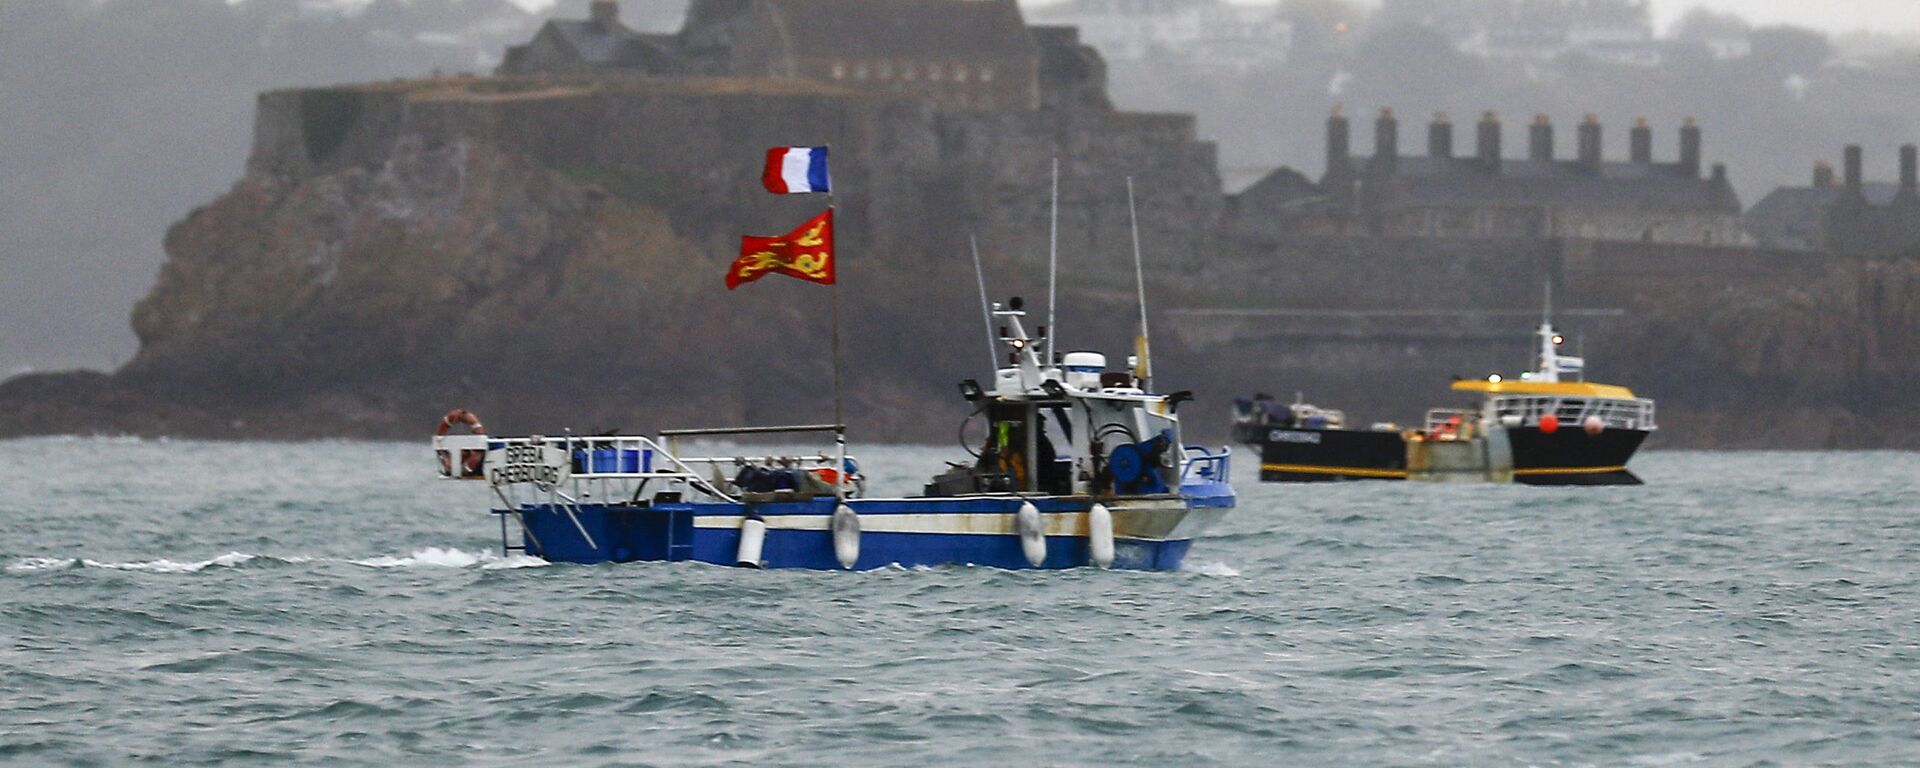 Французские рыбацкие суда протестуют у побережью острова Джерси - Sputnik Азербайджан, 1920, 28.09.2021